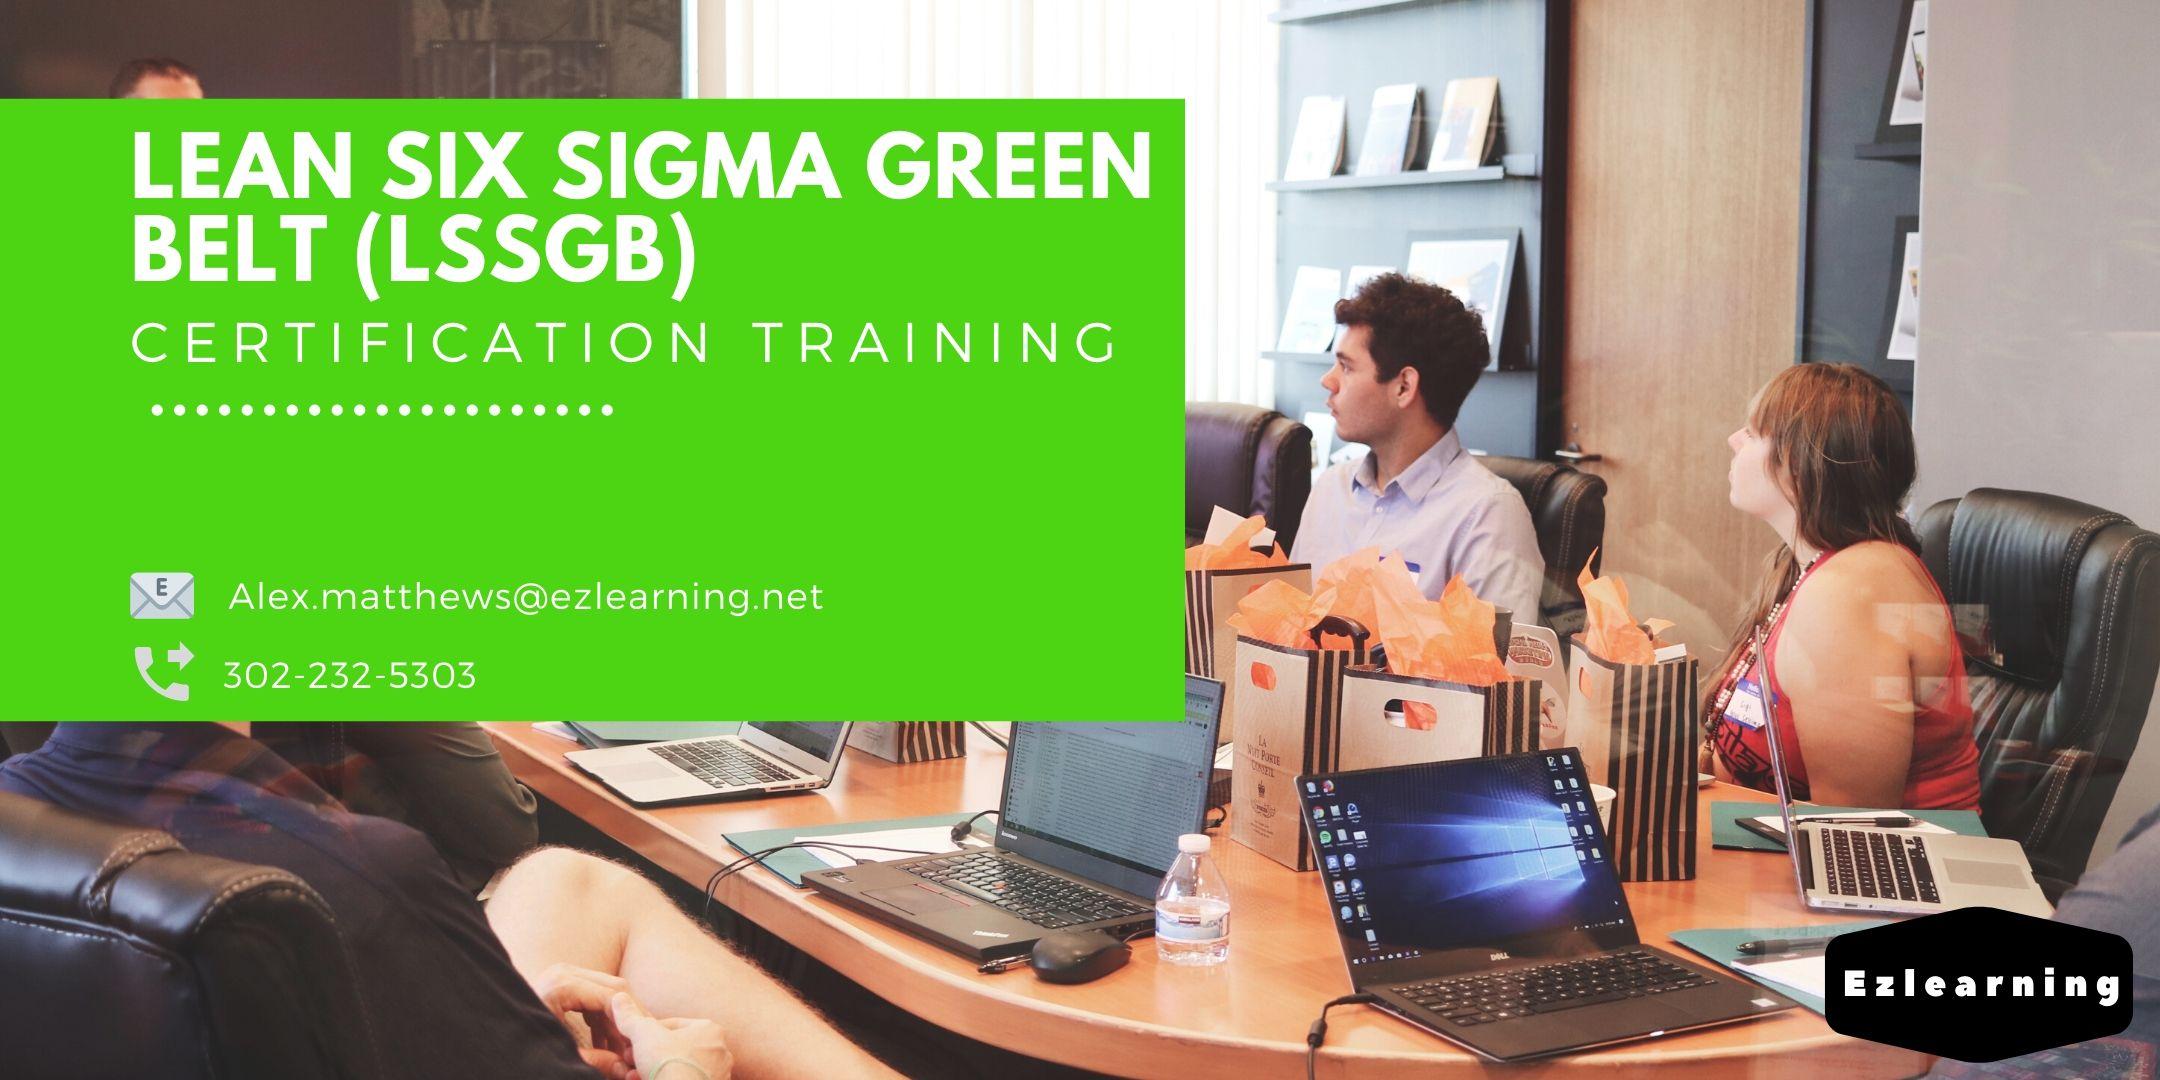 Lean Six Sigma Green Belt Certification Training in Beaumont-Port Arthur,TX